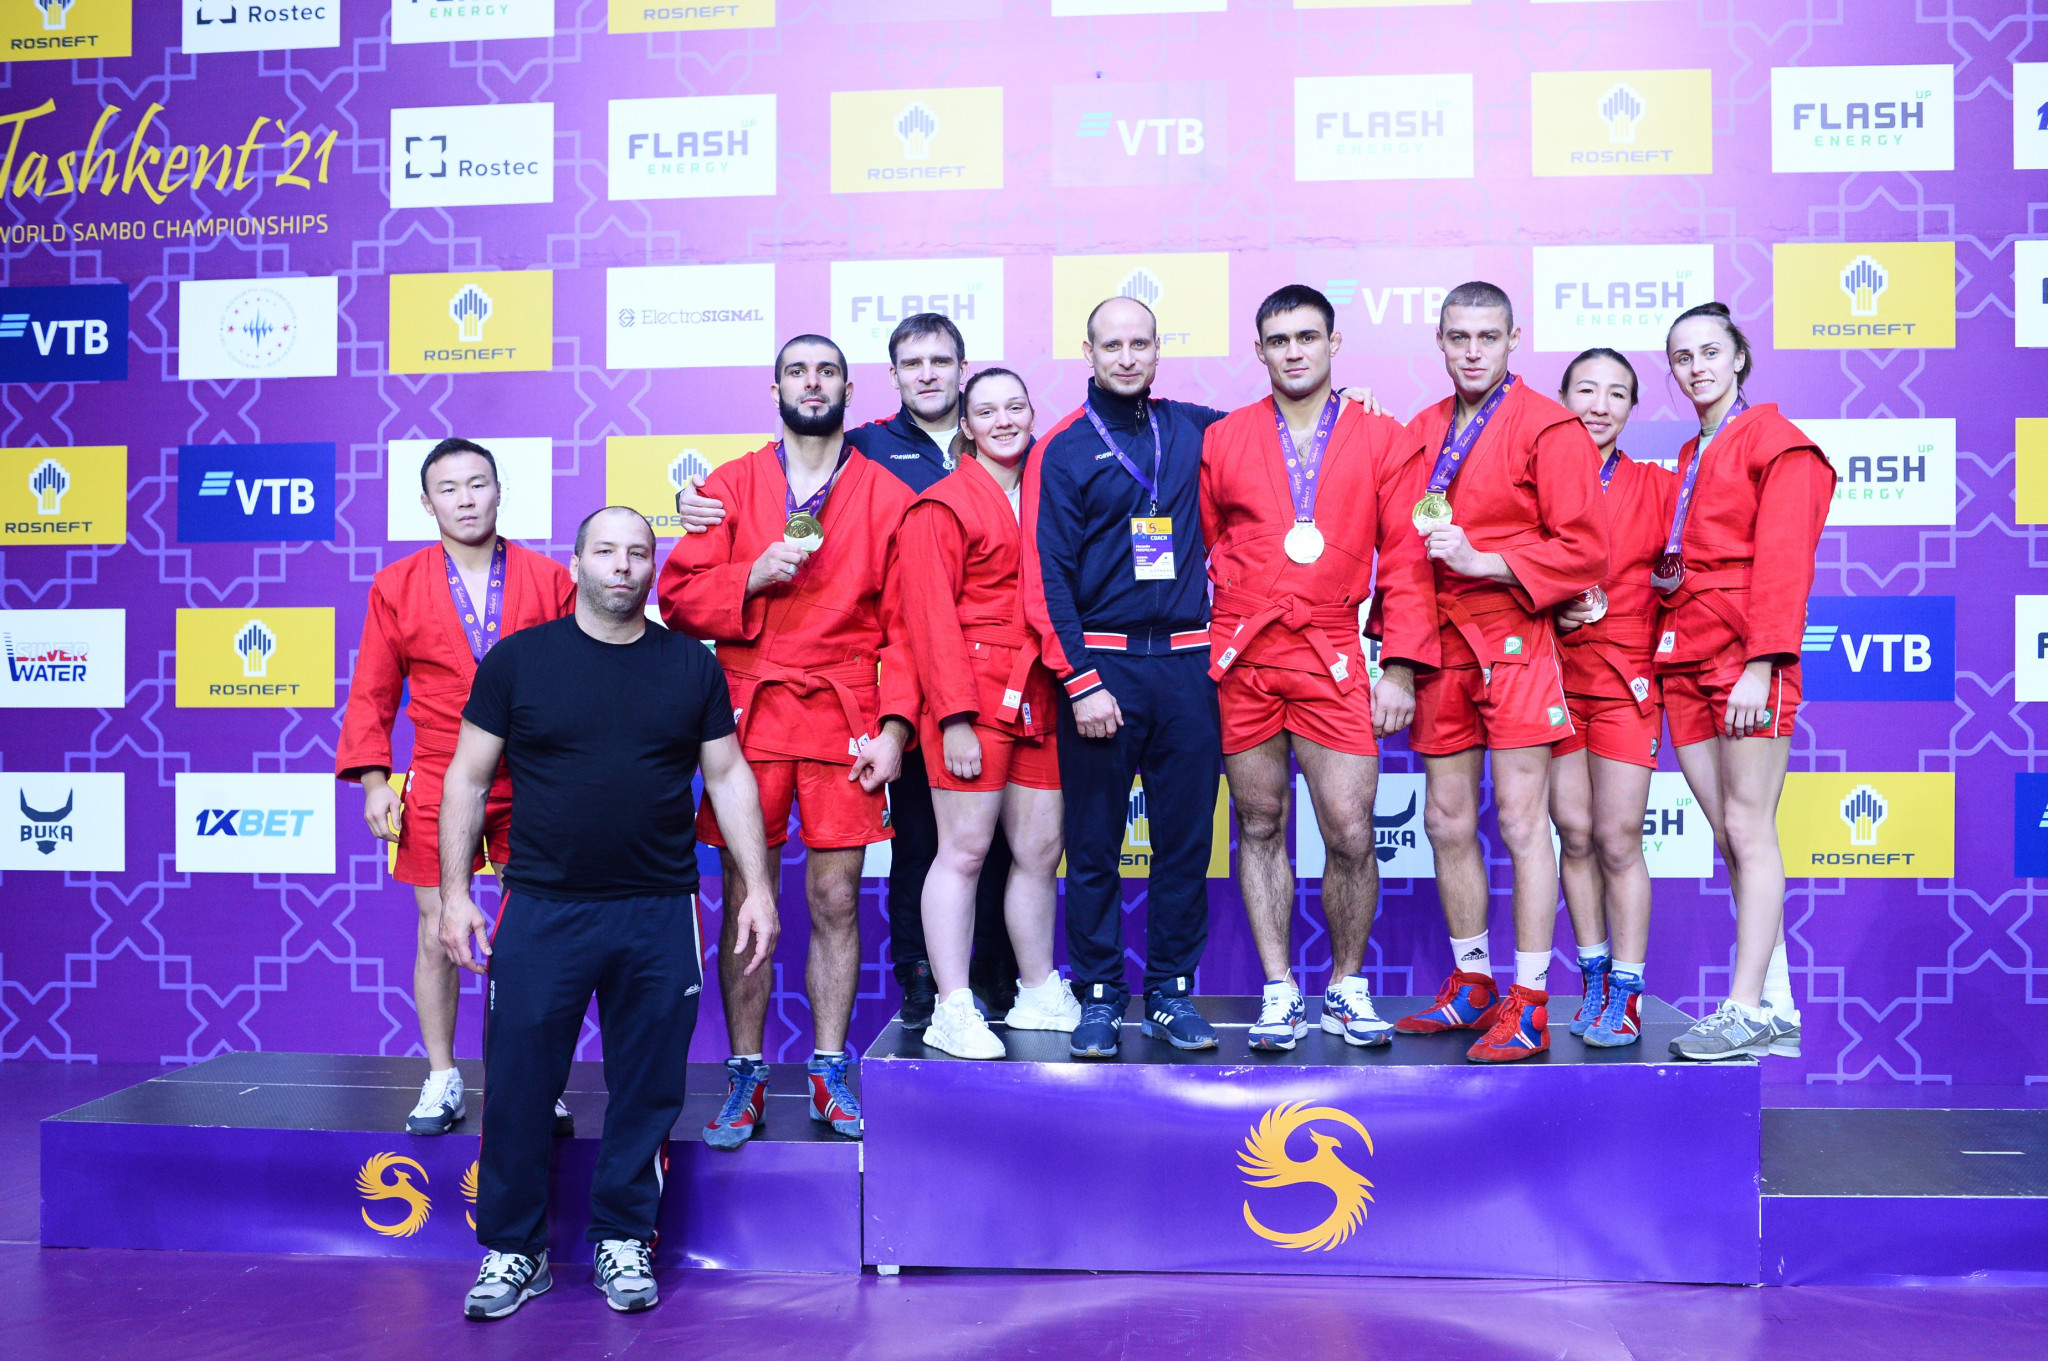 Osipenko wins ninth gold as Russia notch four on final day of World Sambo Championships